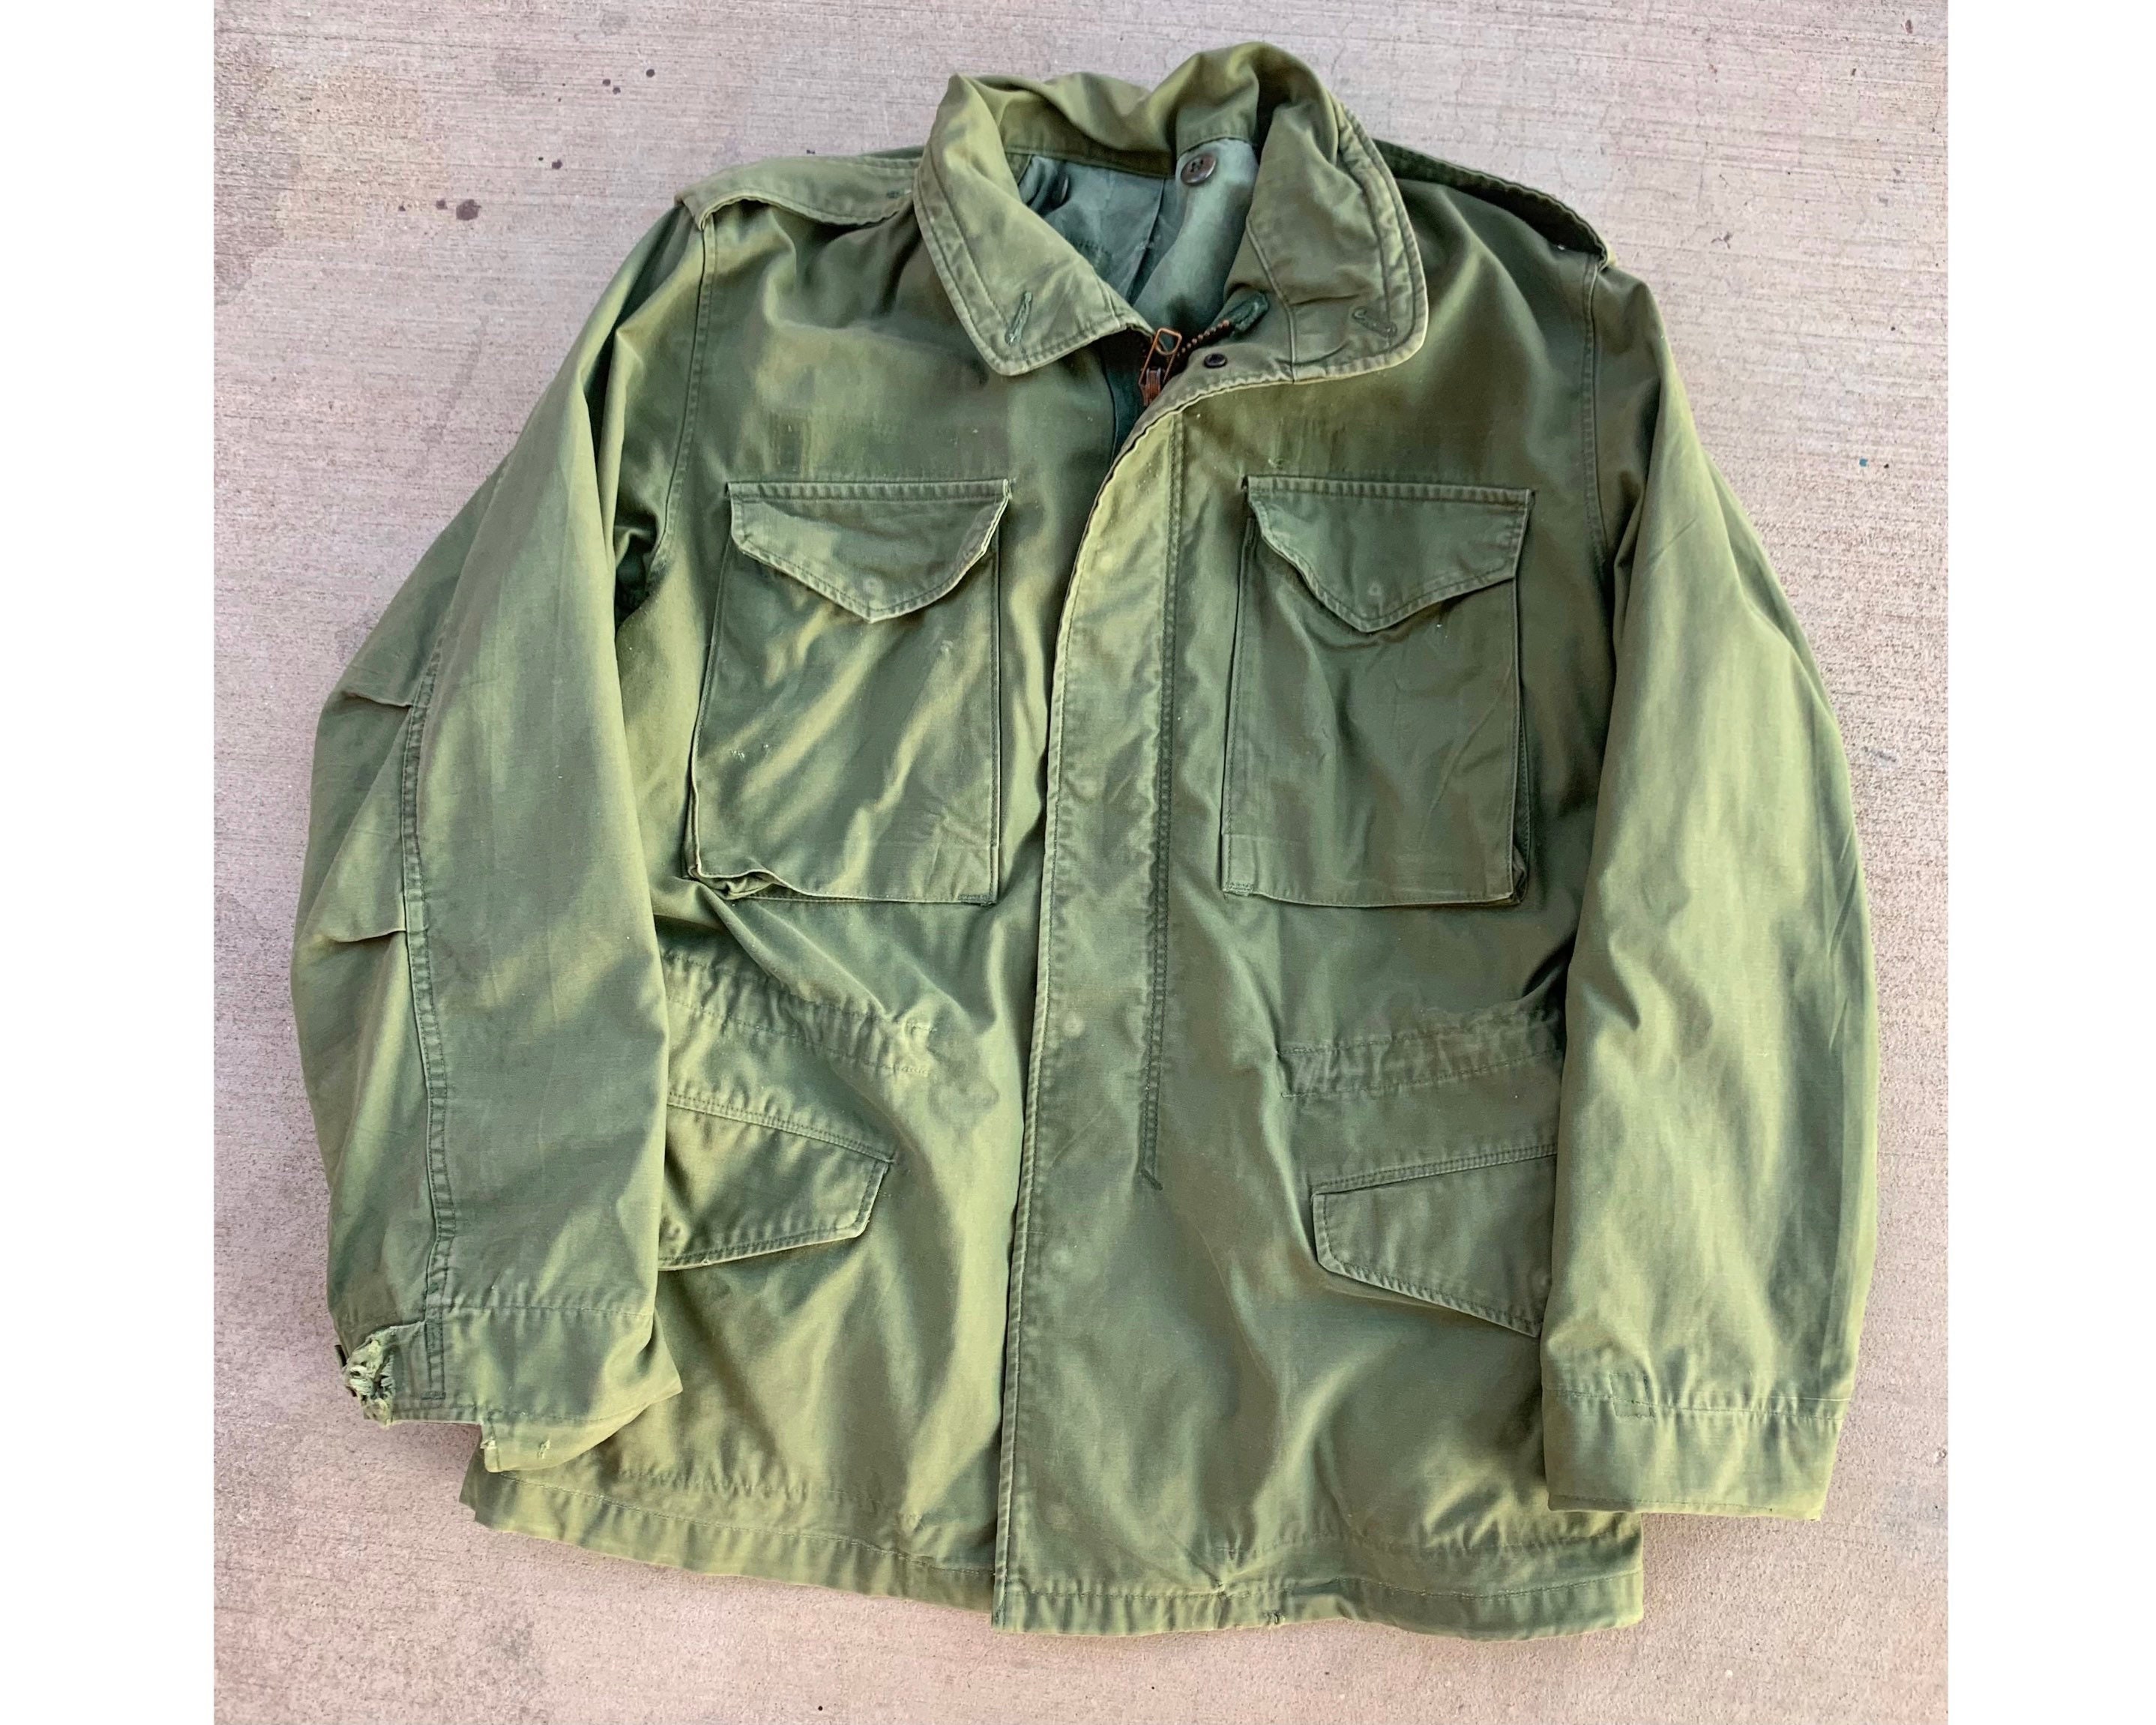 Vietnam Jungle Jacket for sale | Only 3 left at -65%